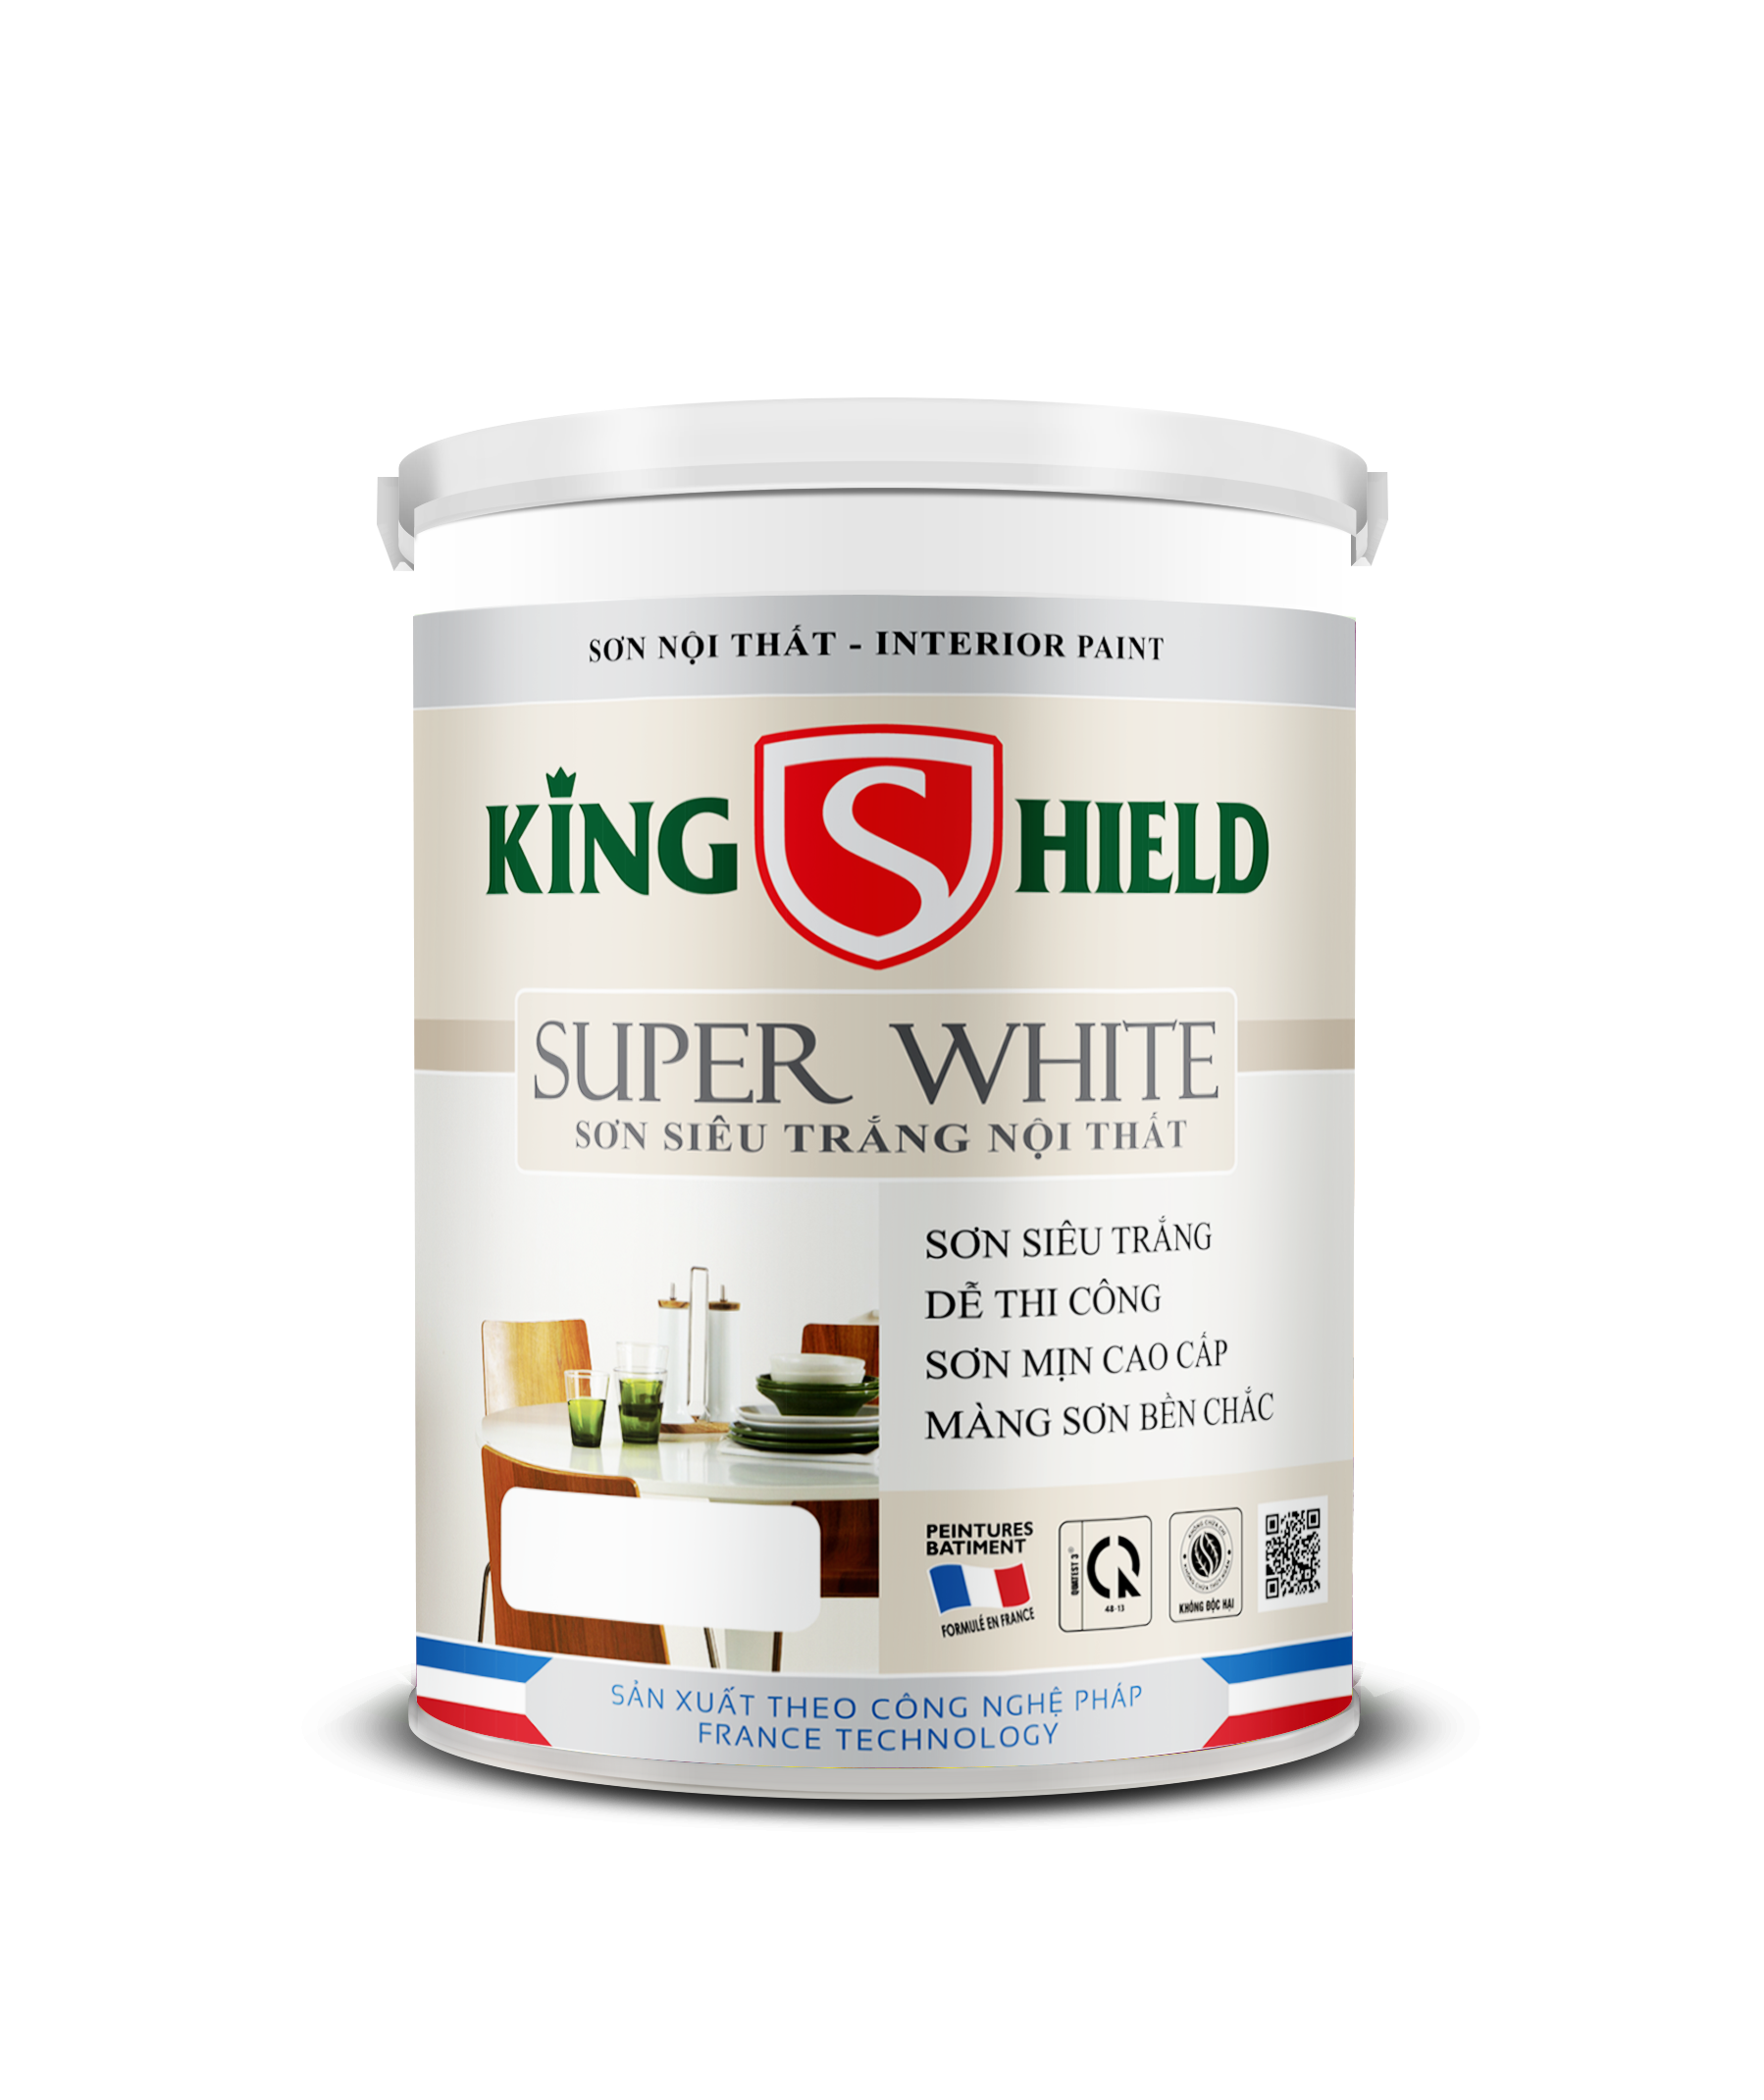 KINGSHIELD SUPER WHITE - SƠN SIÊU TRẮNG